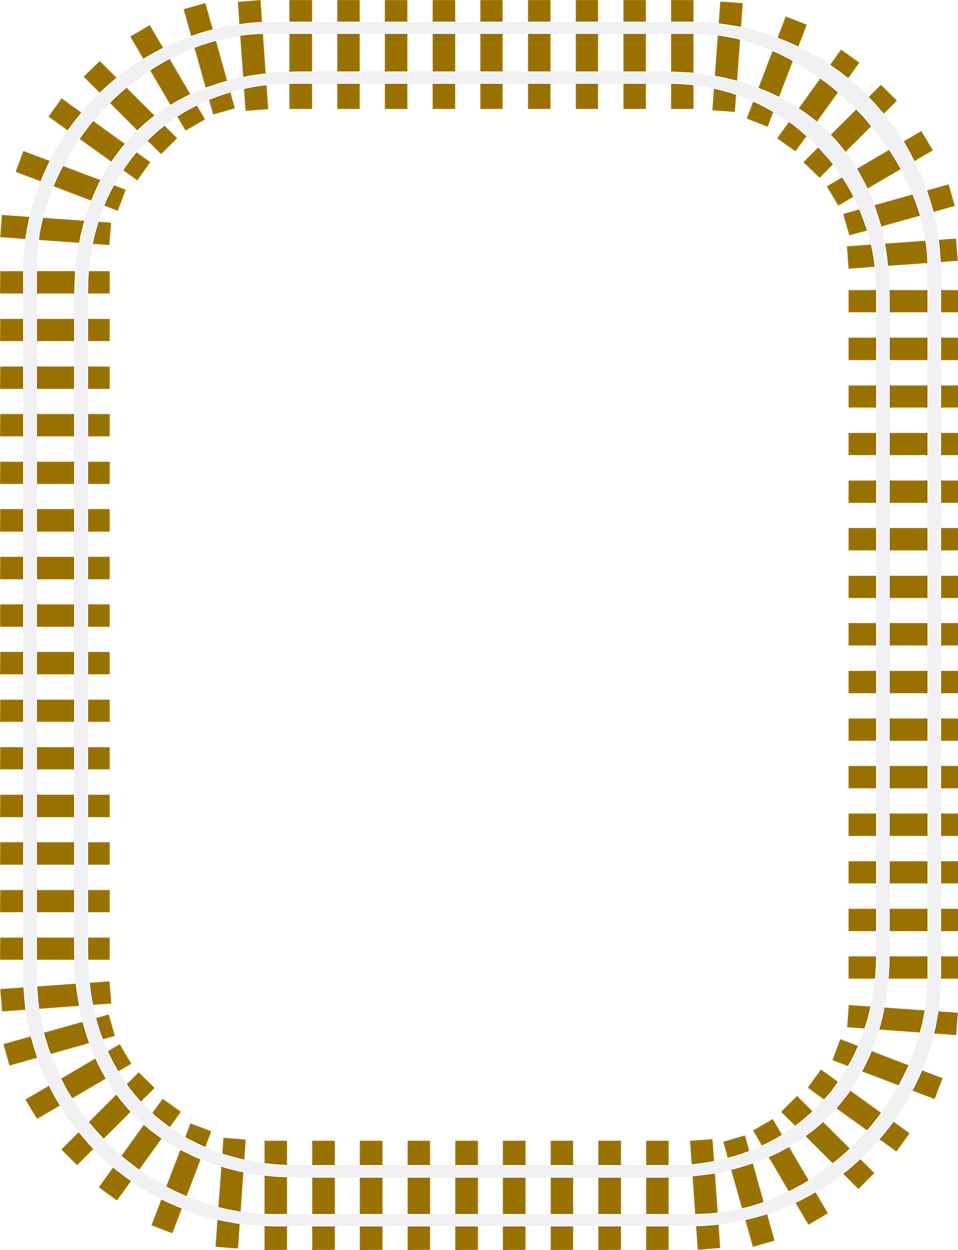 Illustration Of A Blank Railroad Track Frame Border   Free Stock Photo